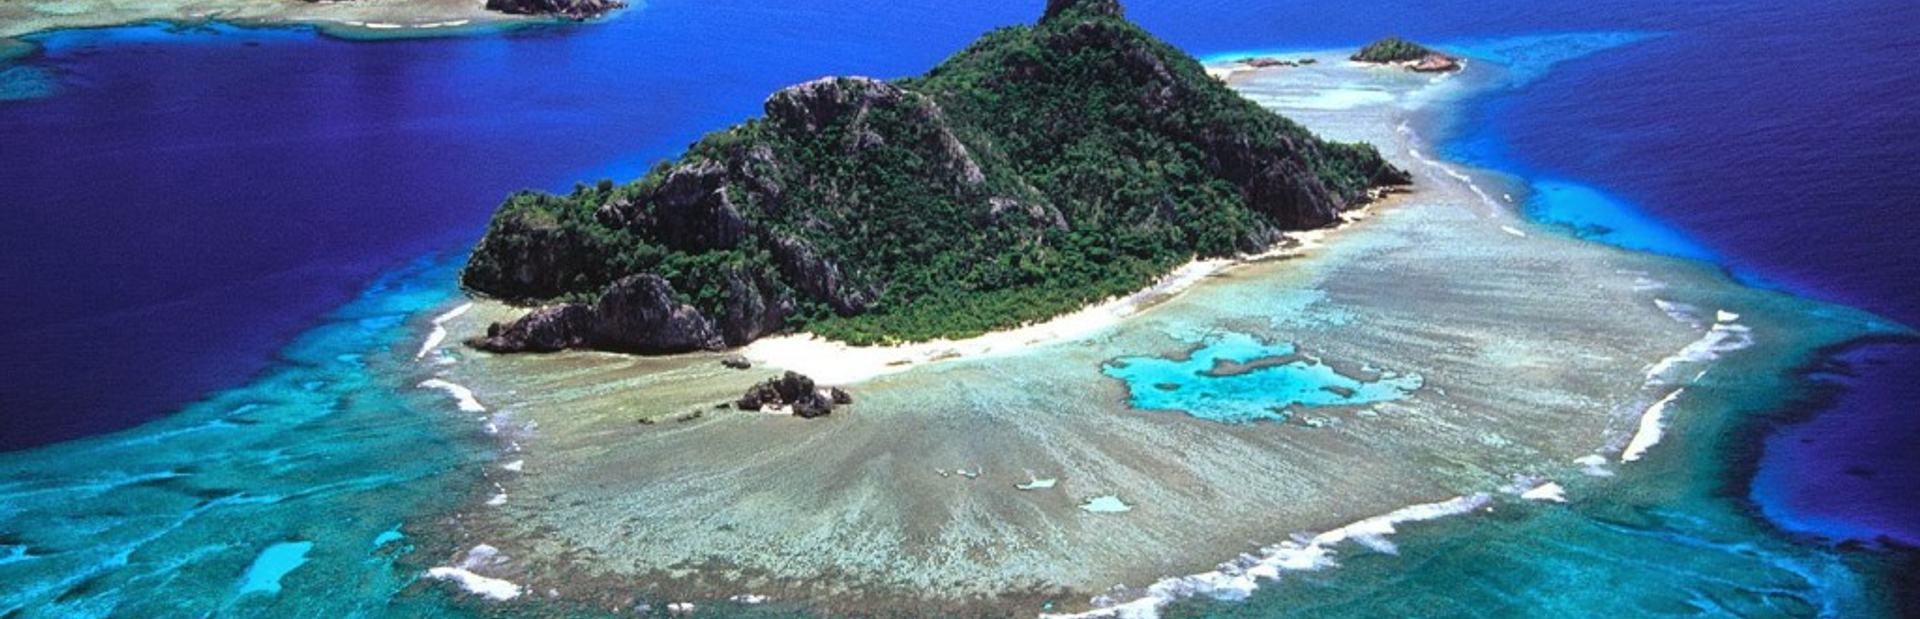 Dolphin Island Fiji Image 1